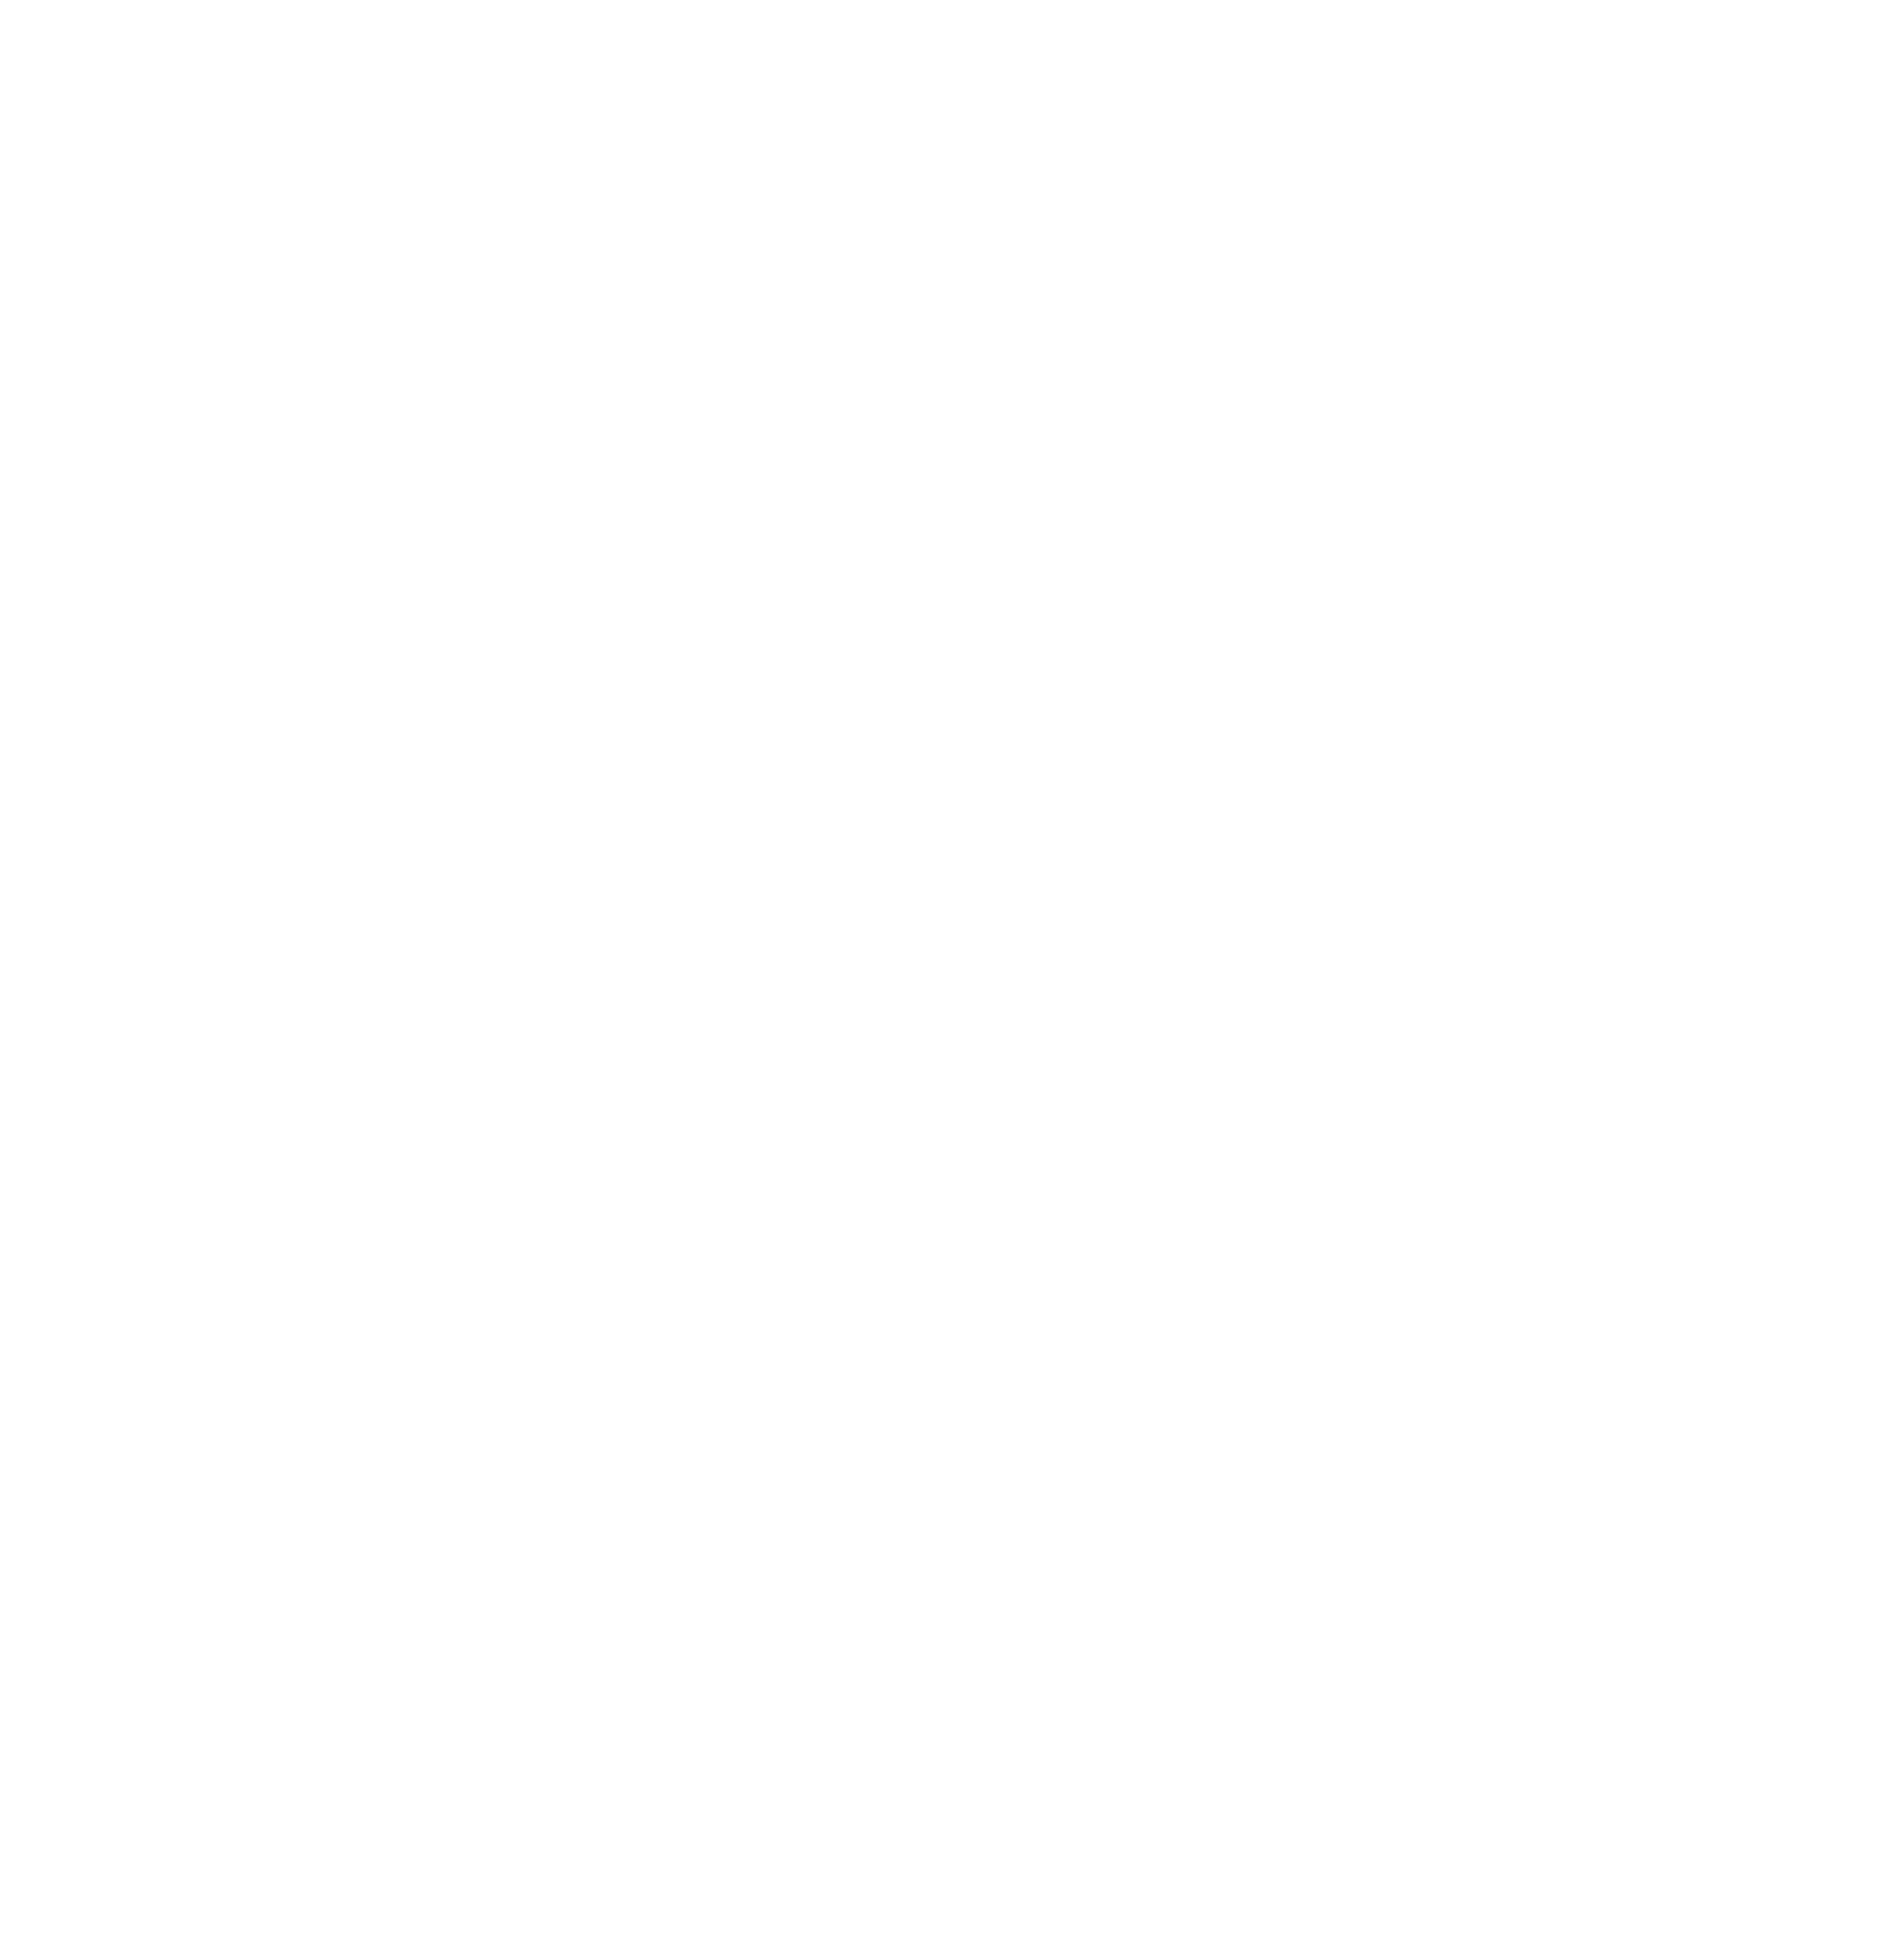 2d-icon